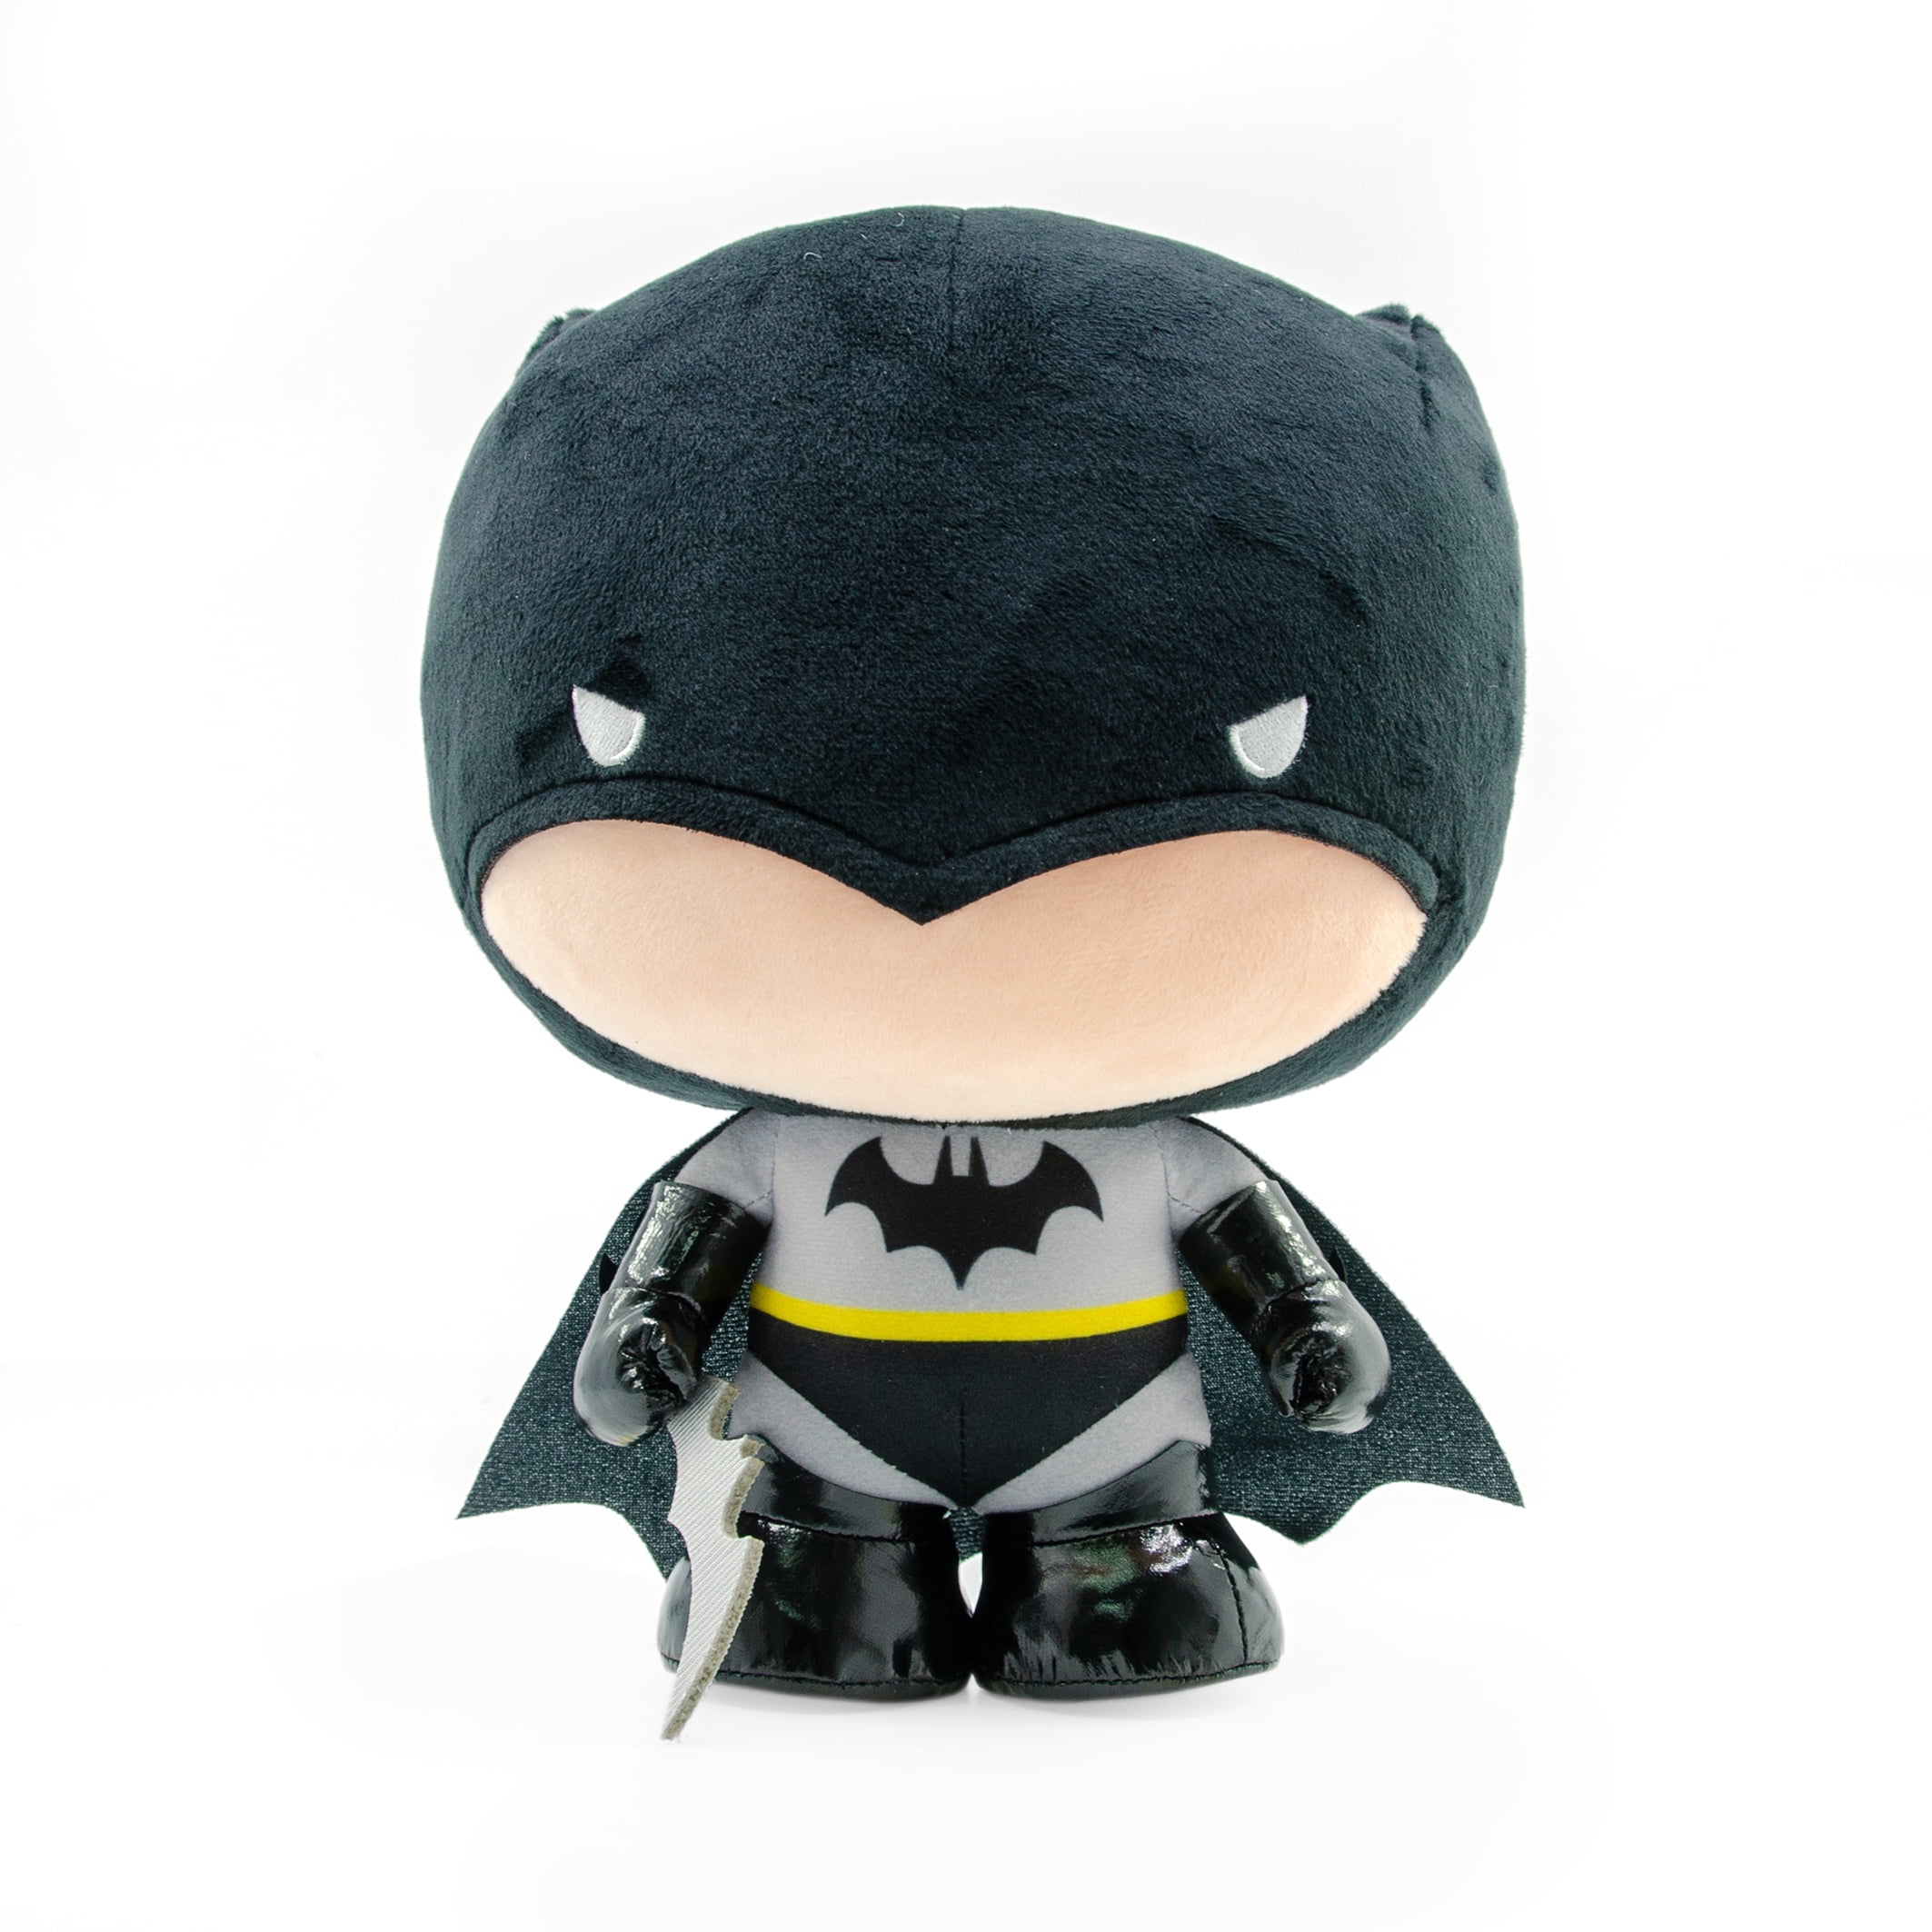 DC Hero Batman The Dark Knight Rises Plush Toy Soft Stuffed Doll 18'' Kid Gift 